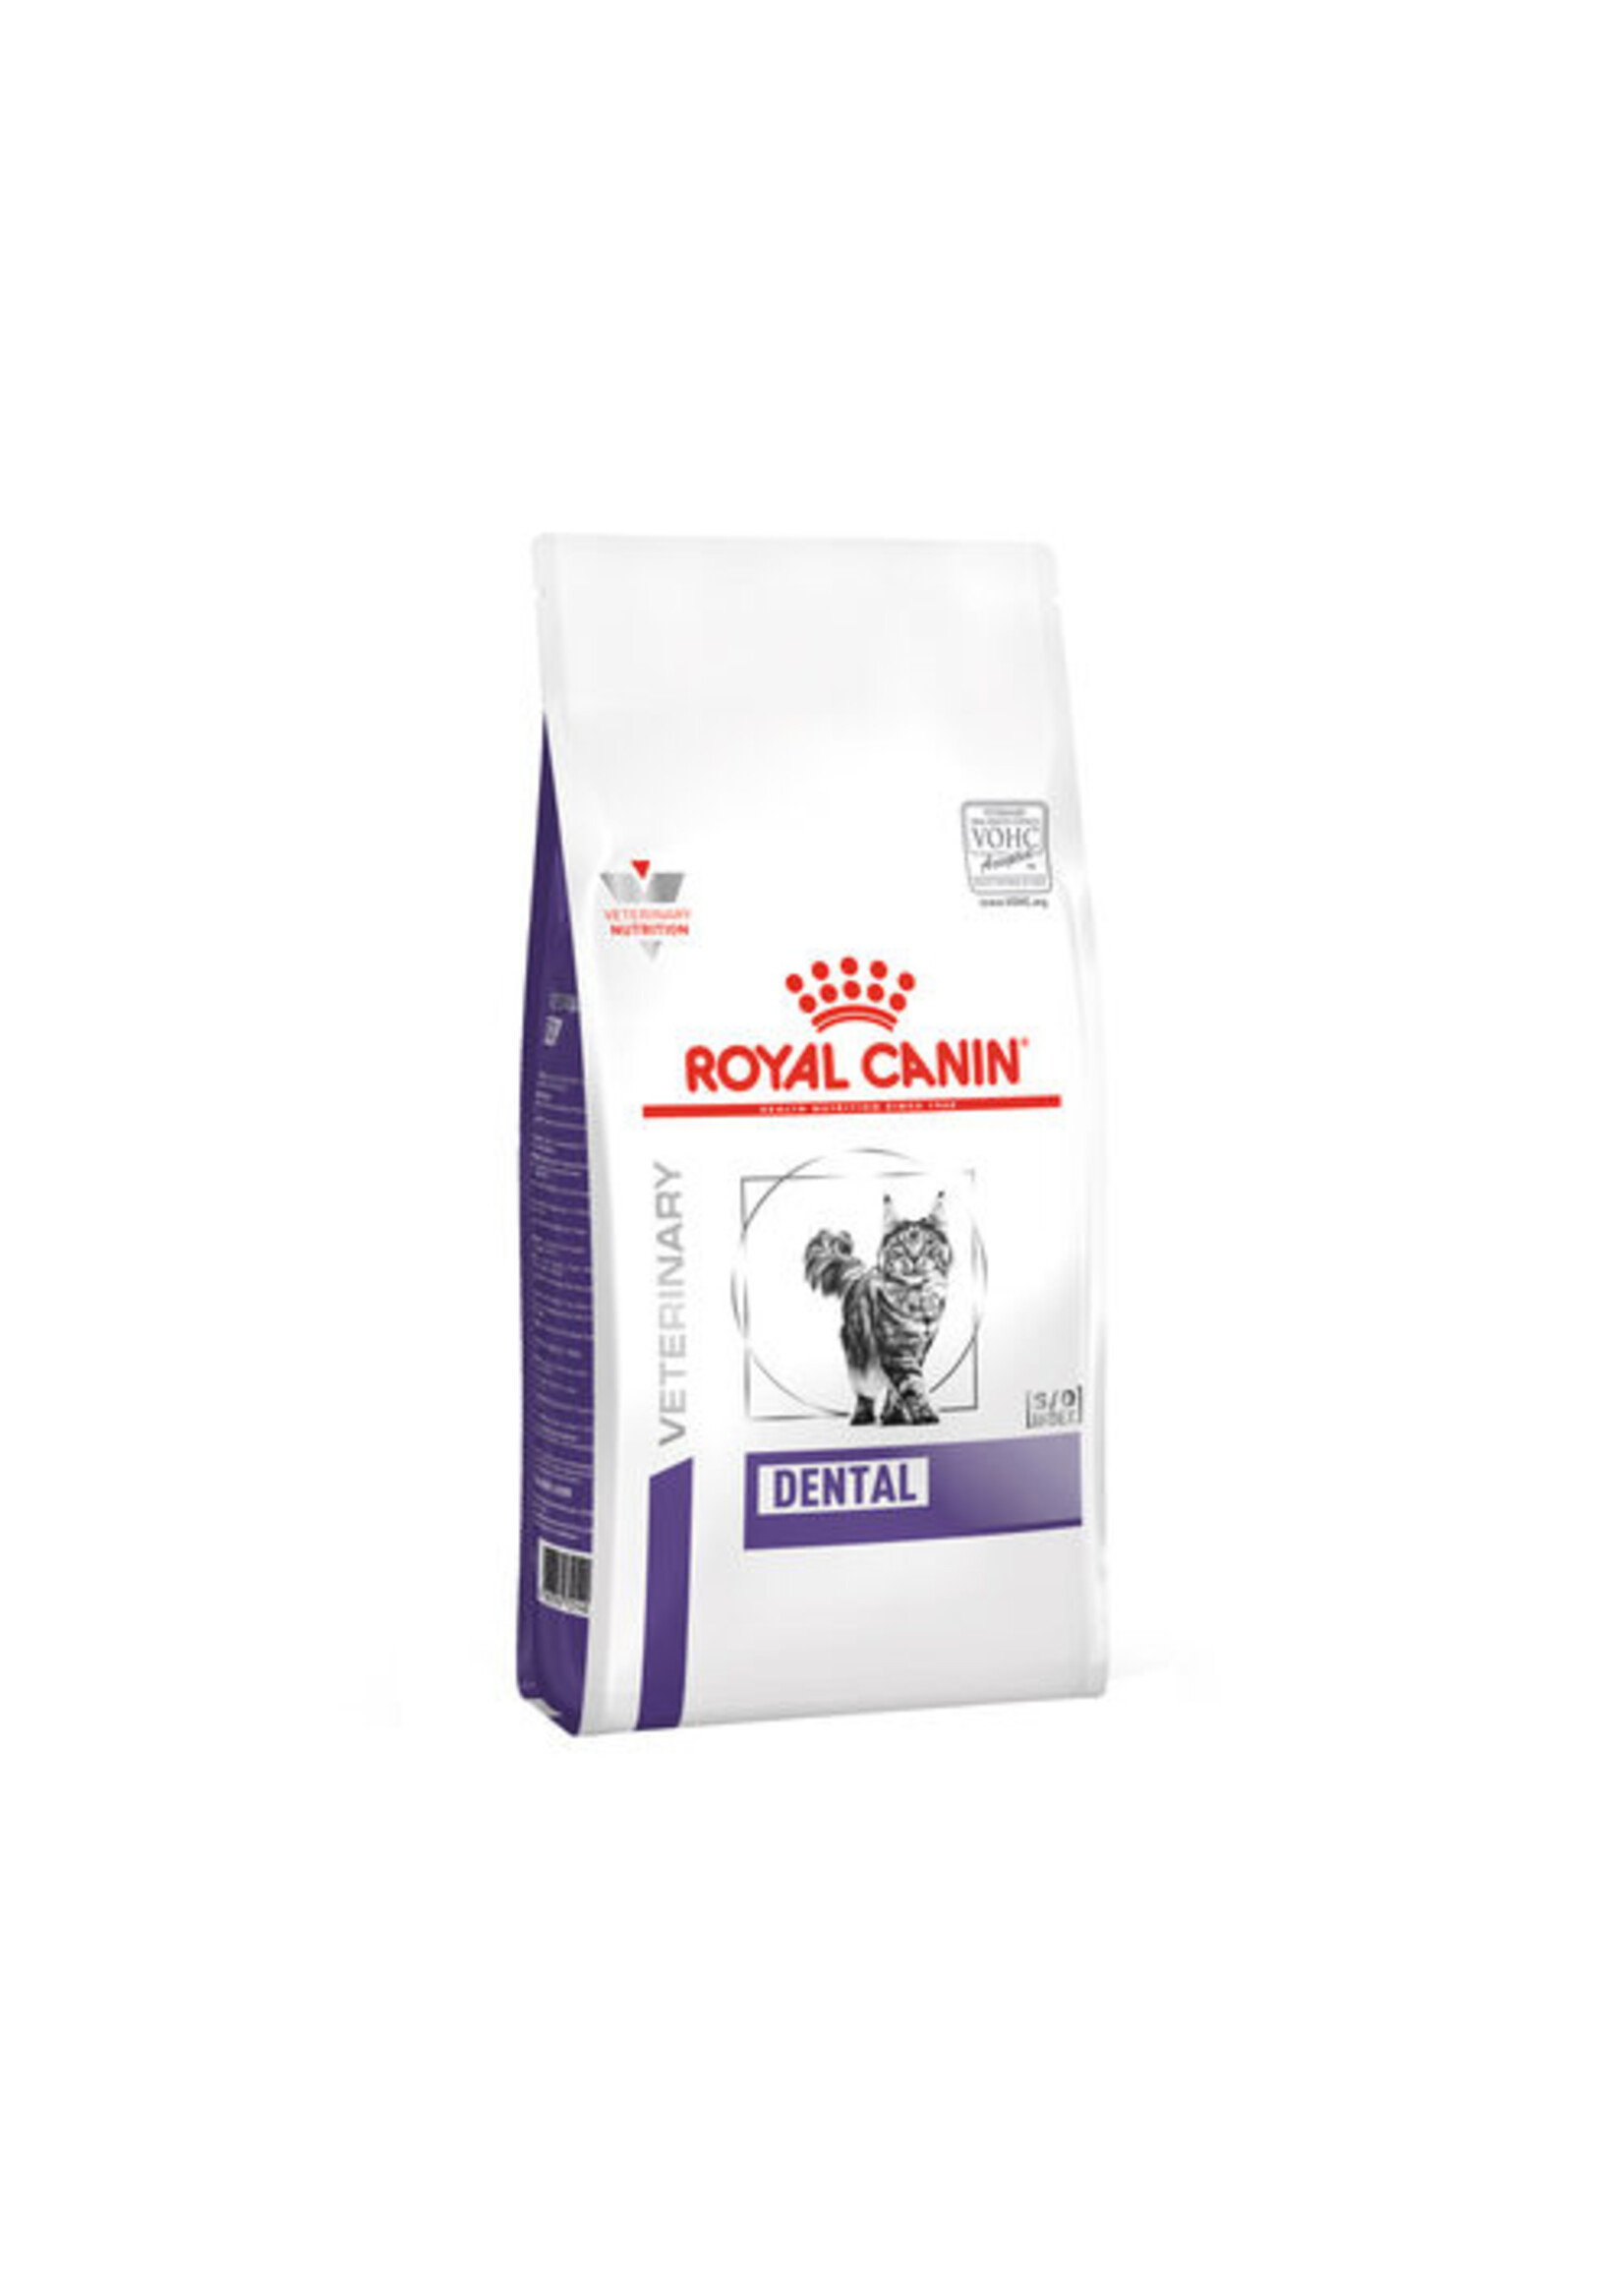 Royal Canin Royal Canin Vdiet Dental Katze 1,5kg